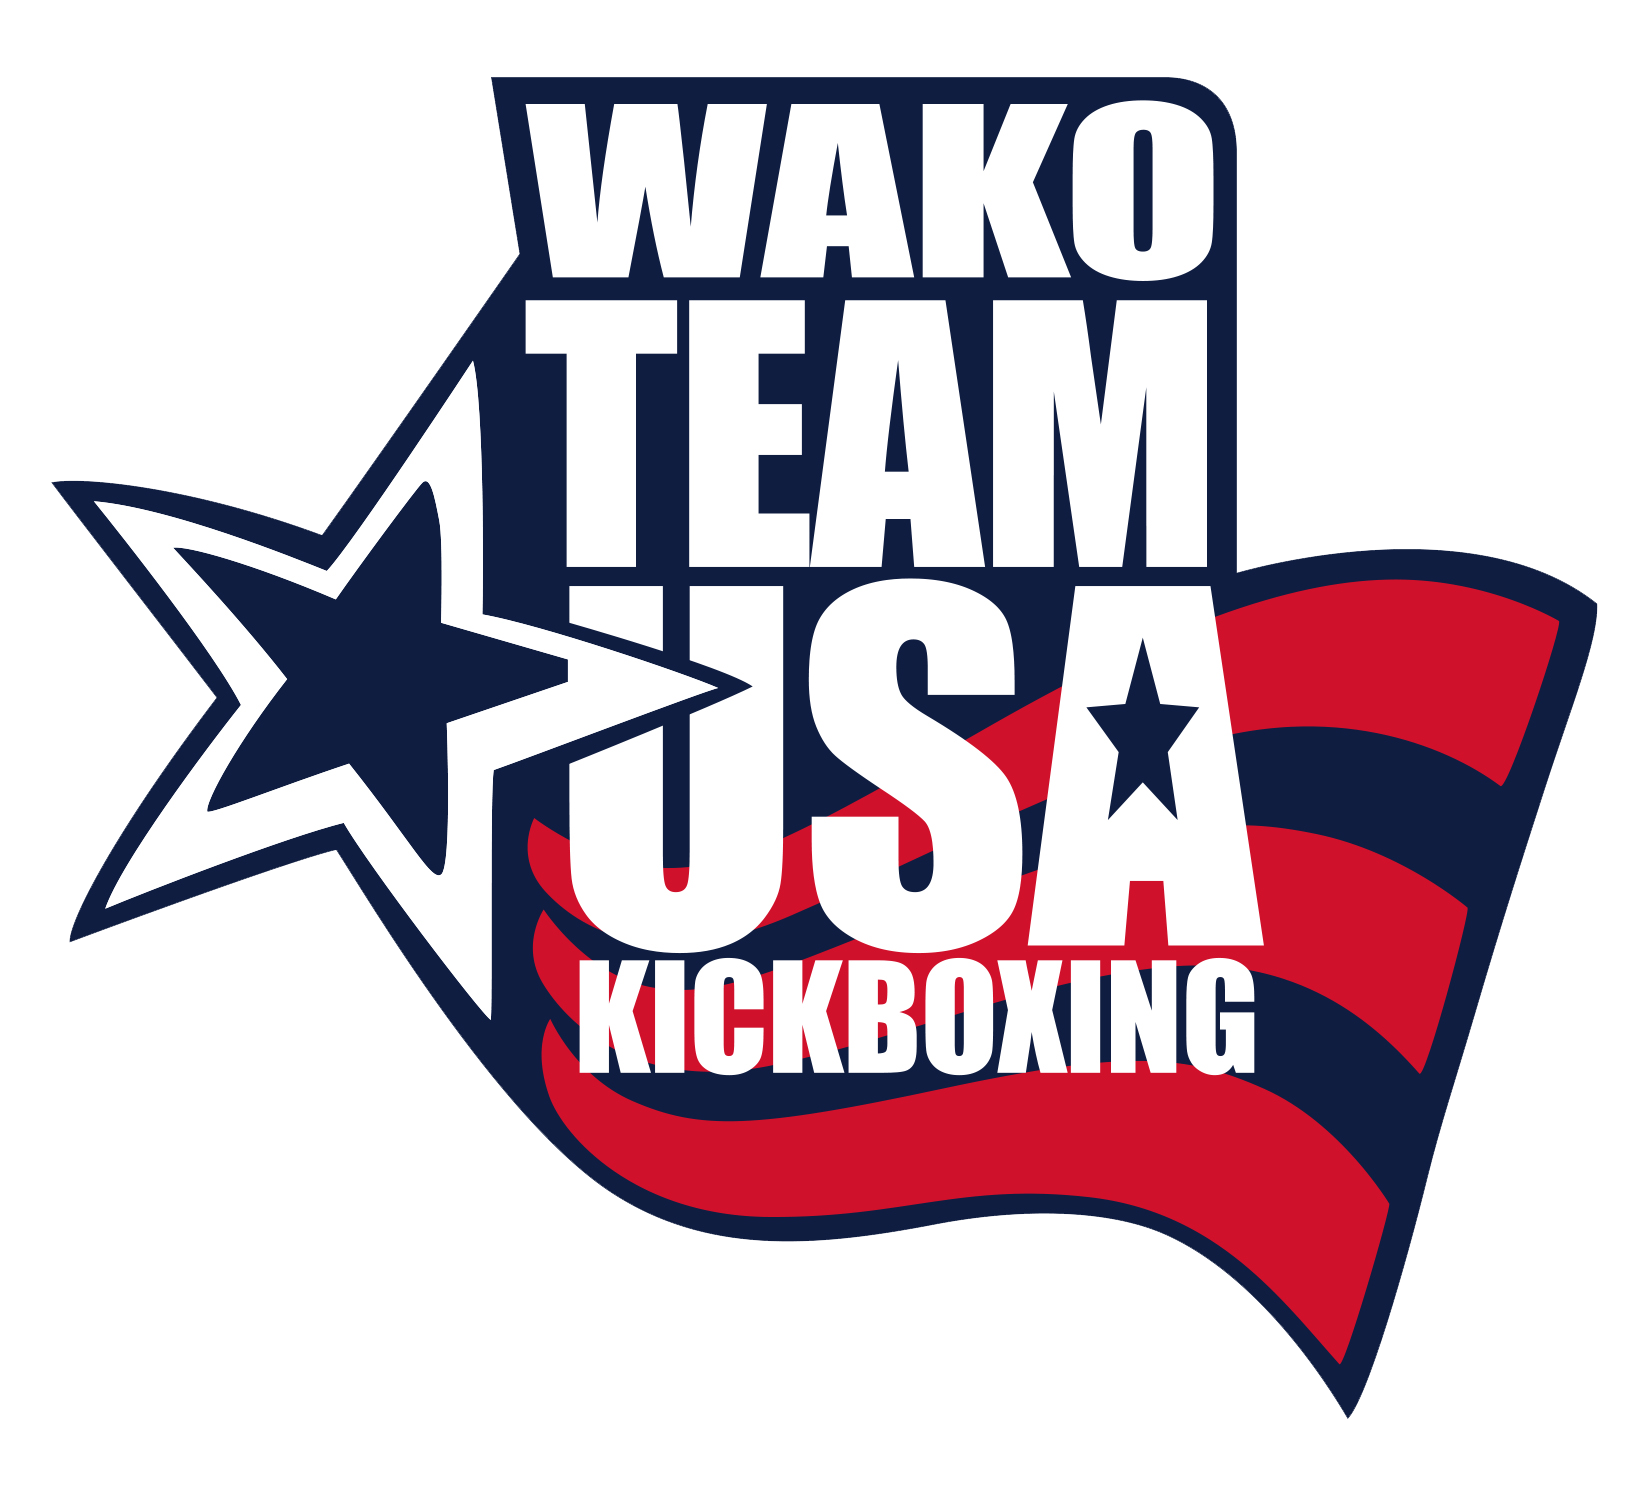 WAKO - Impact Press Release